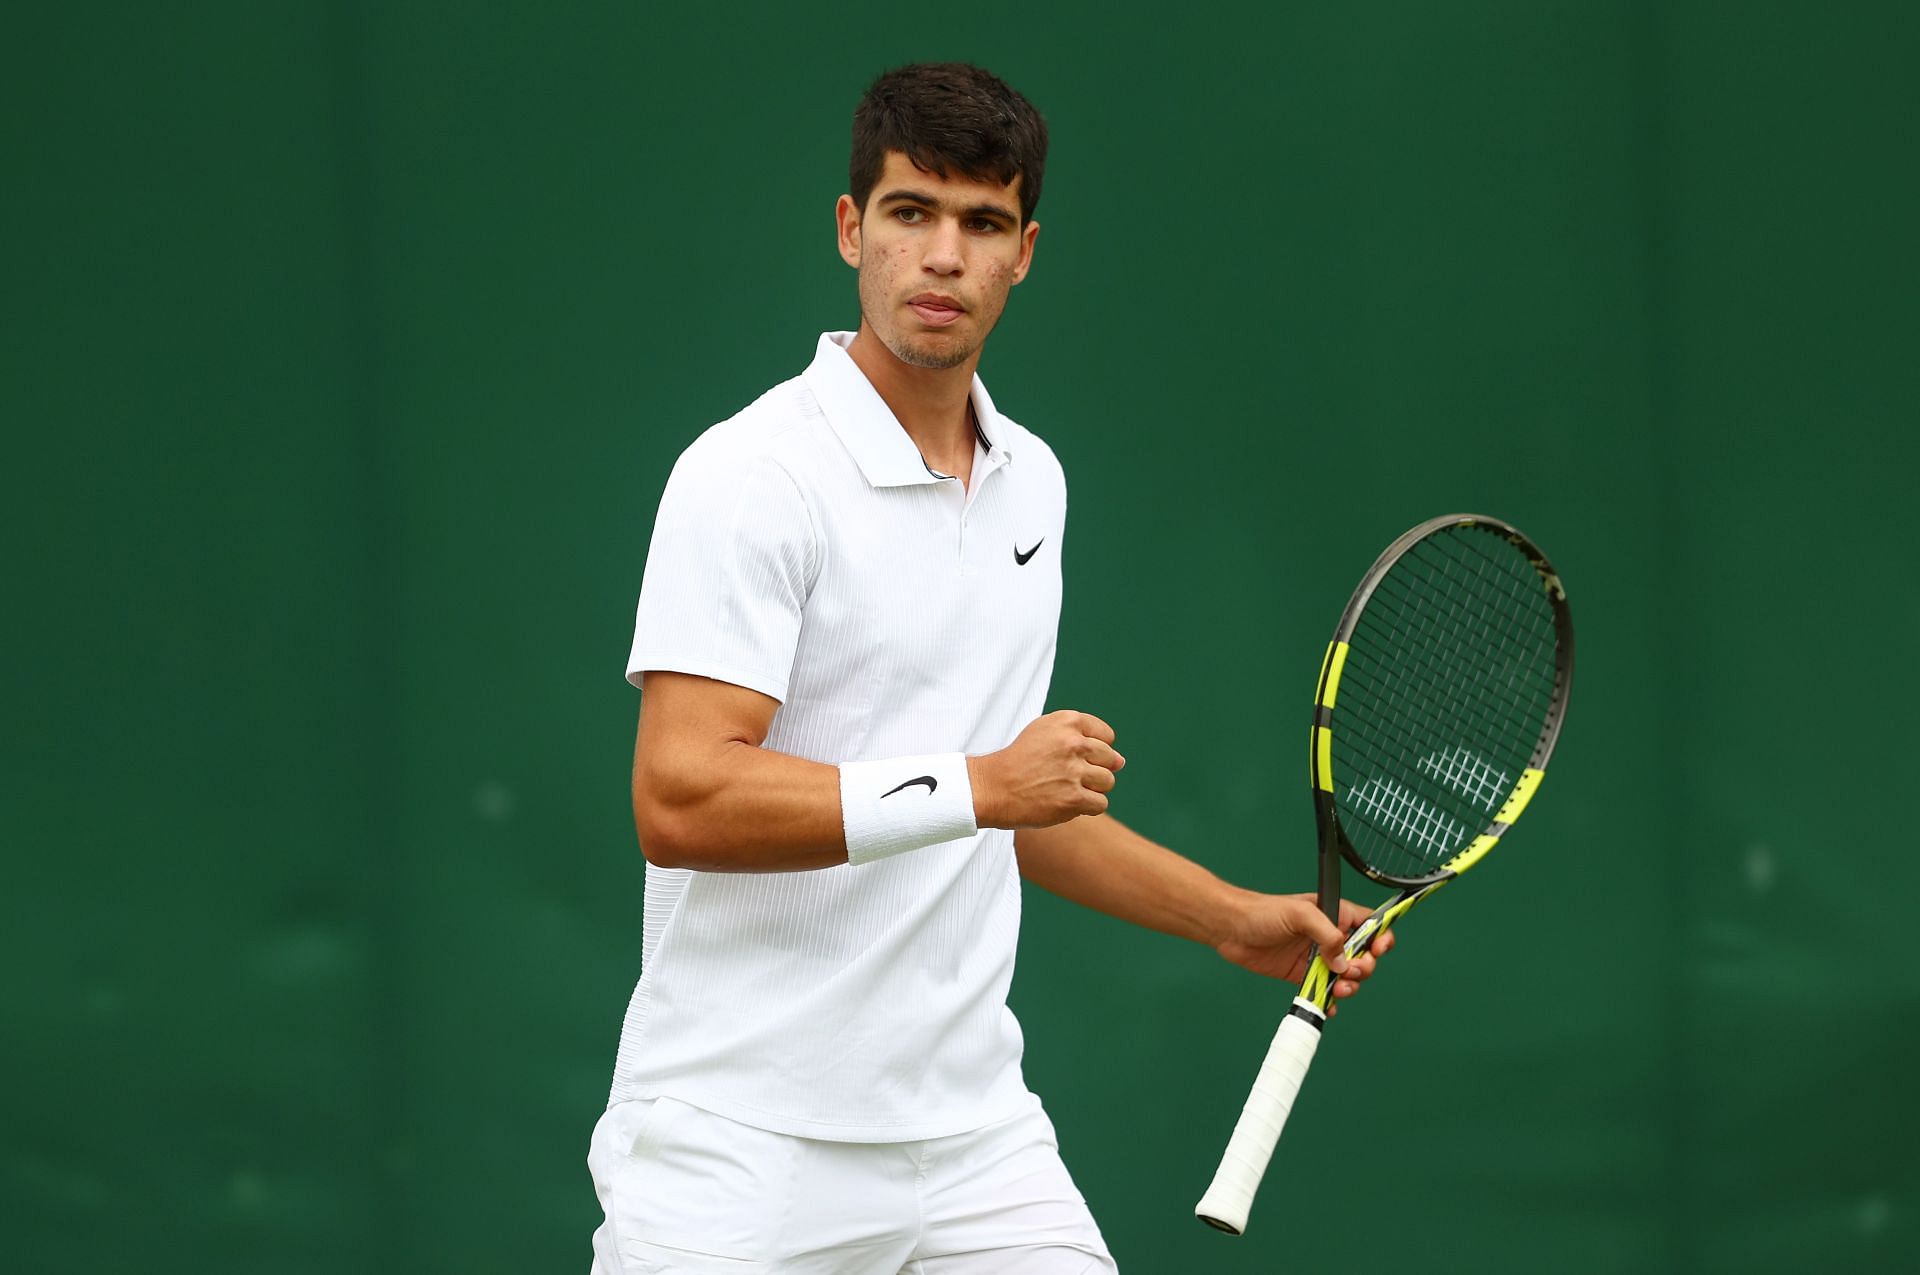 Carlos Alcaraz at the 2021 Wimbledon Championships